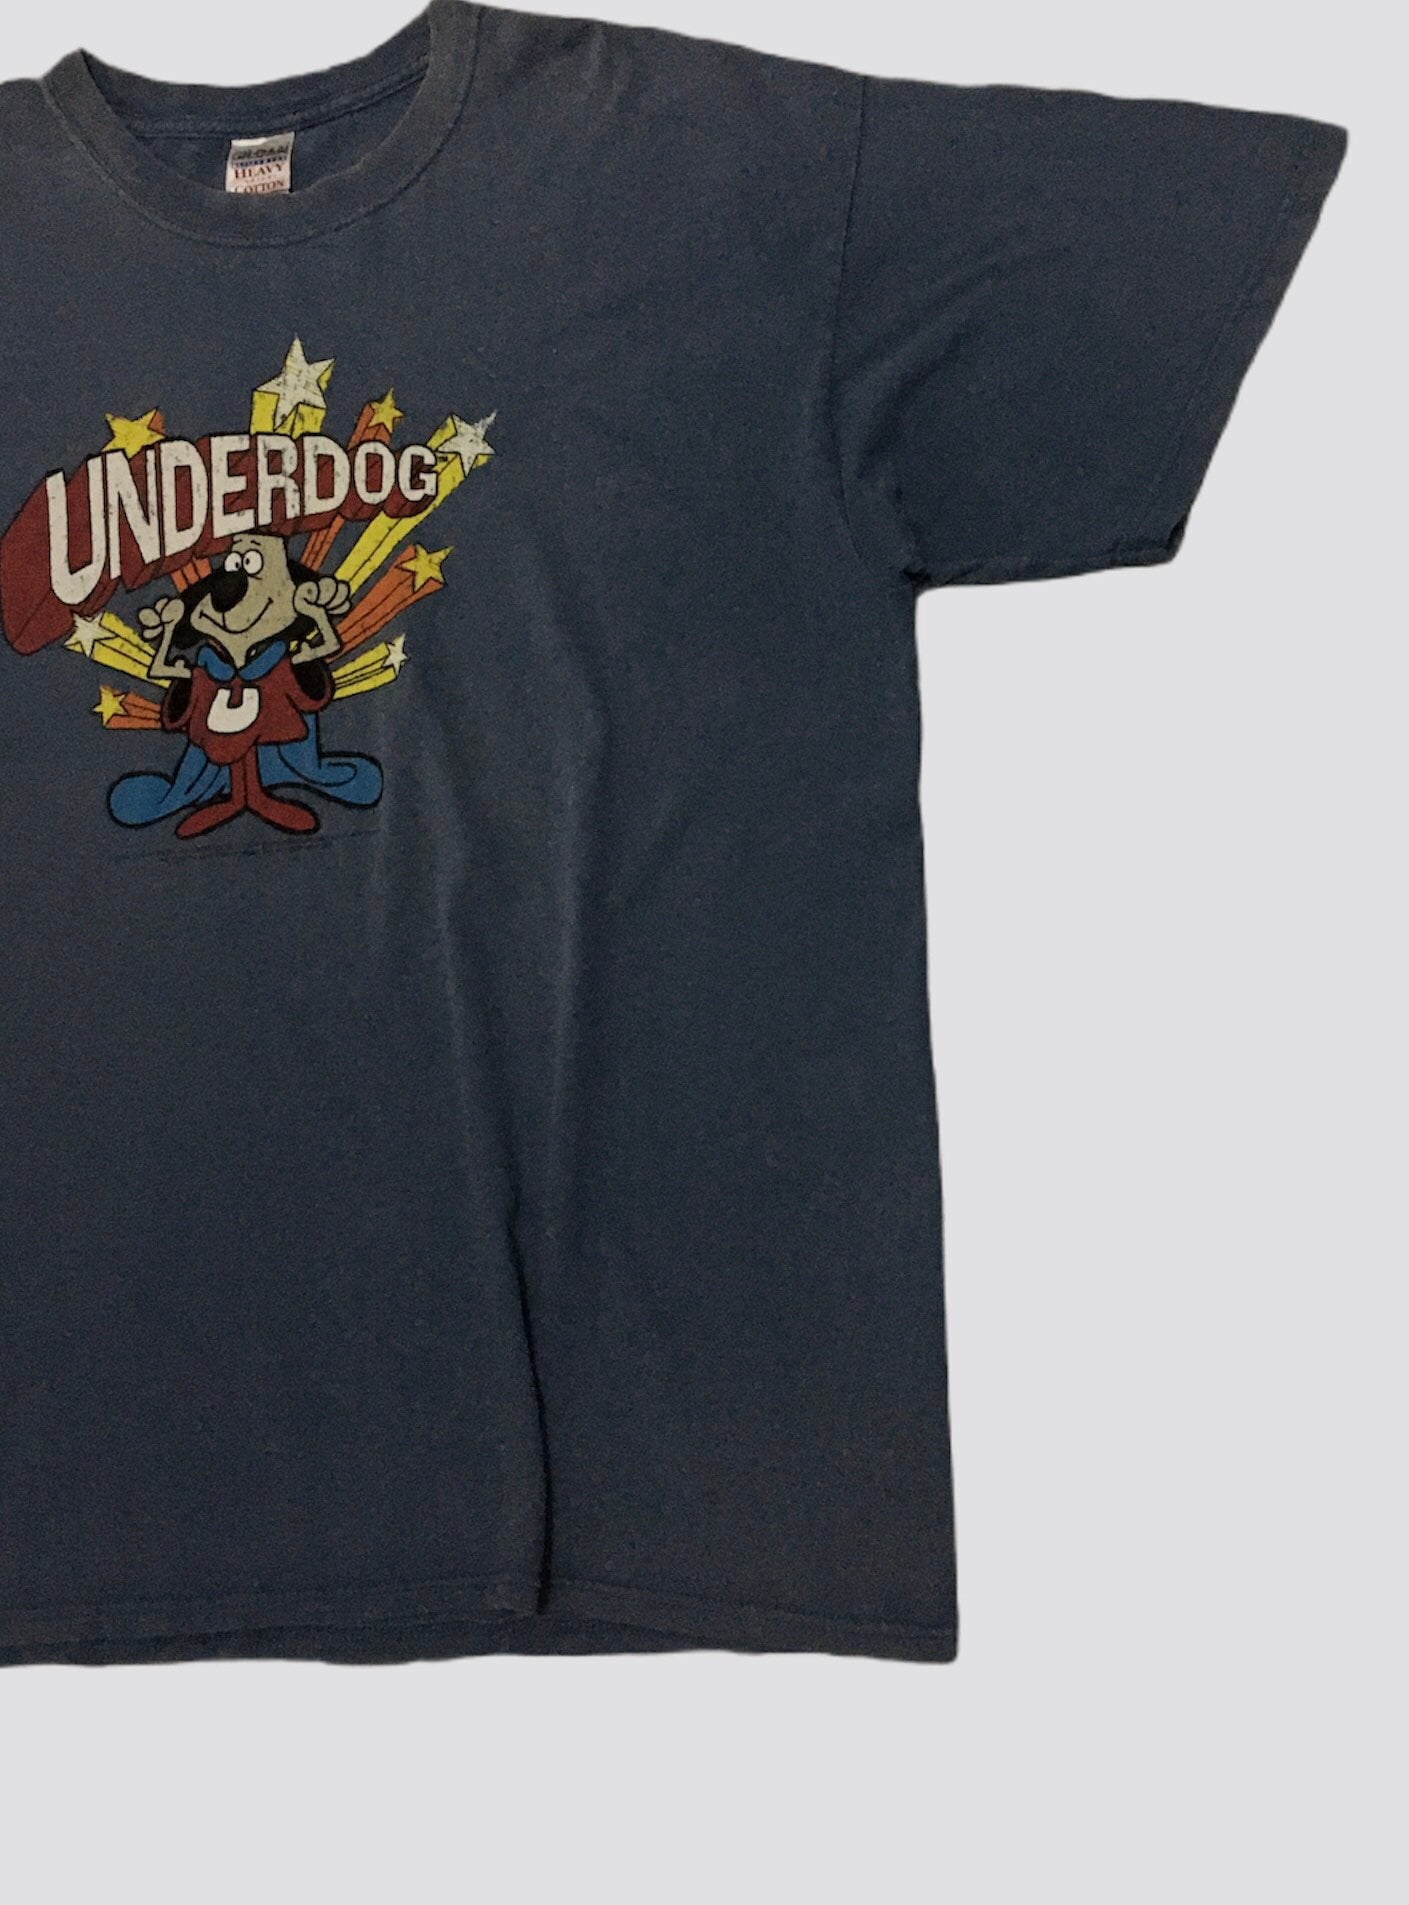 Rare Design Vintage Cartoon UnderDog T-shirt 2000s | Etsy